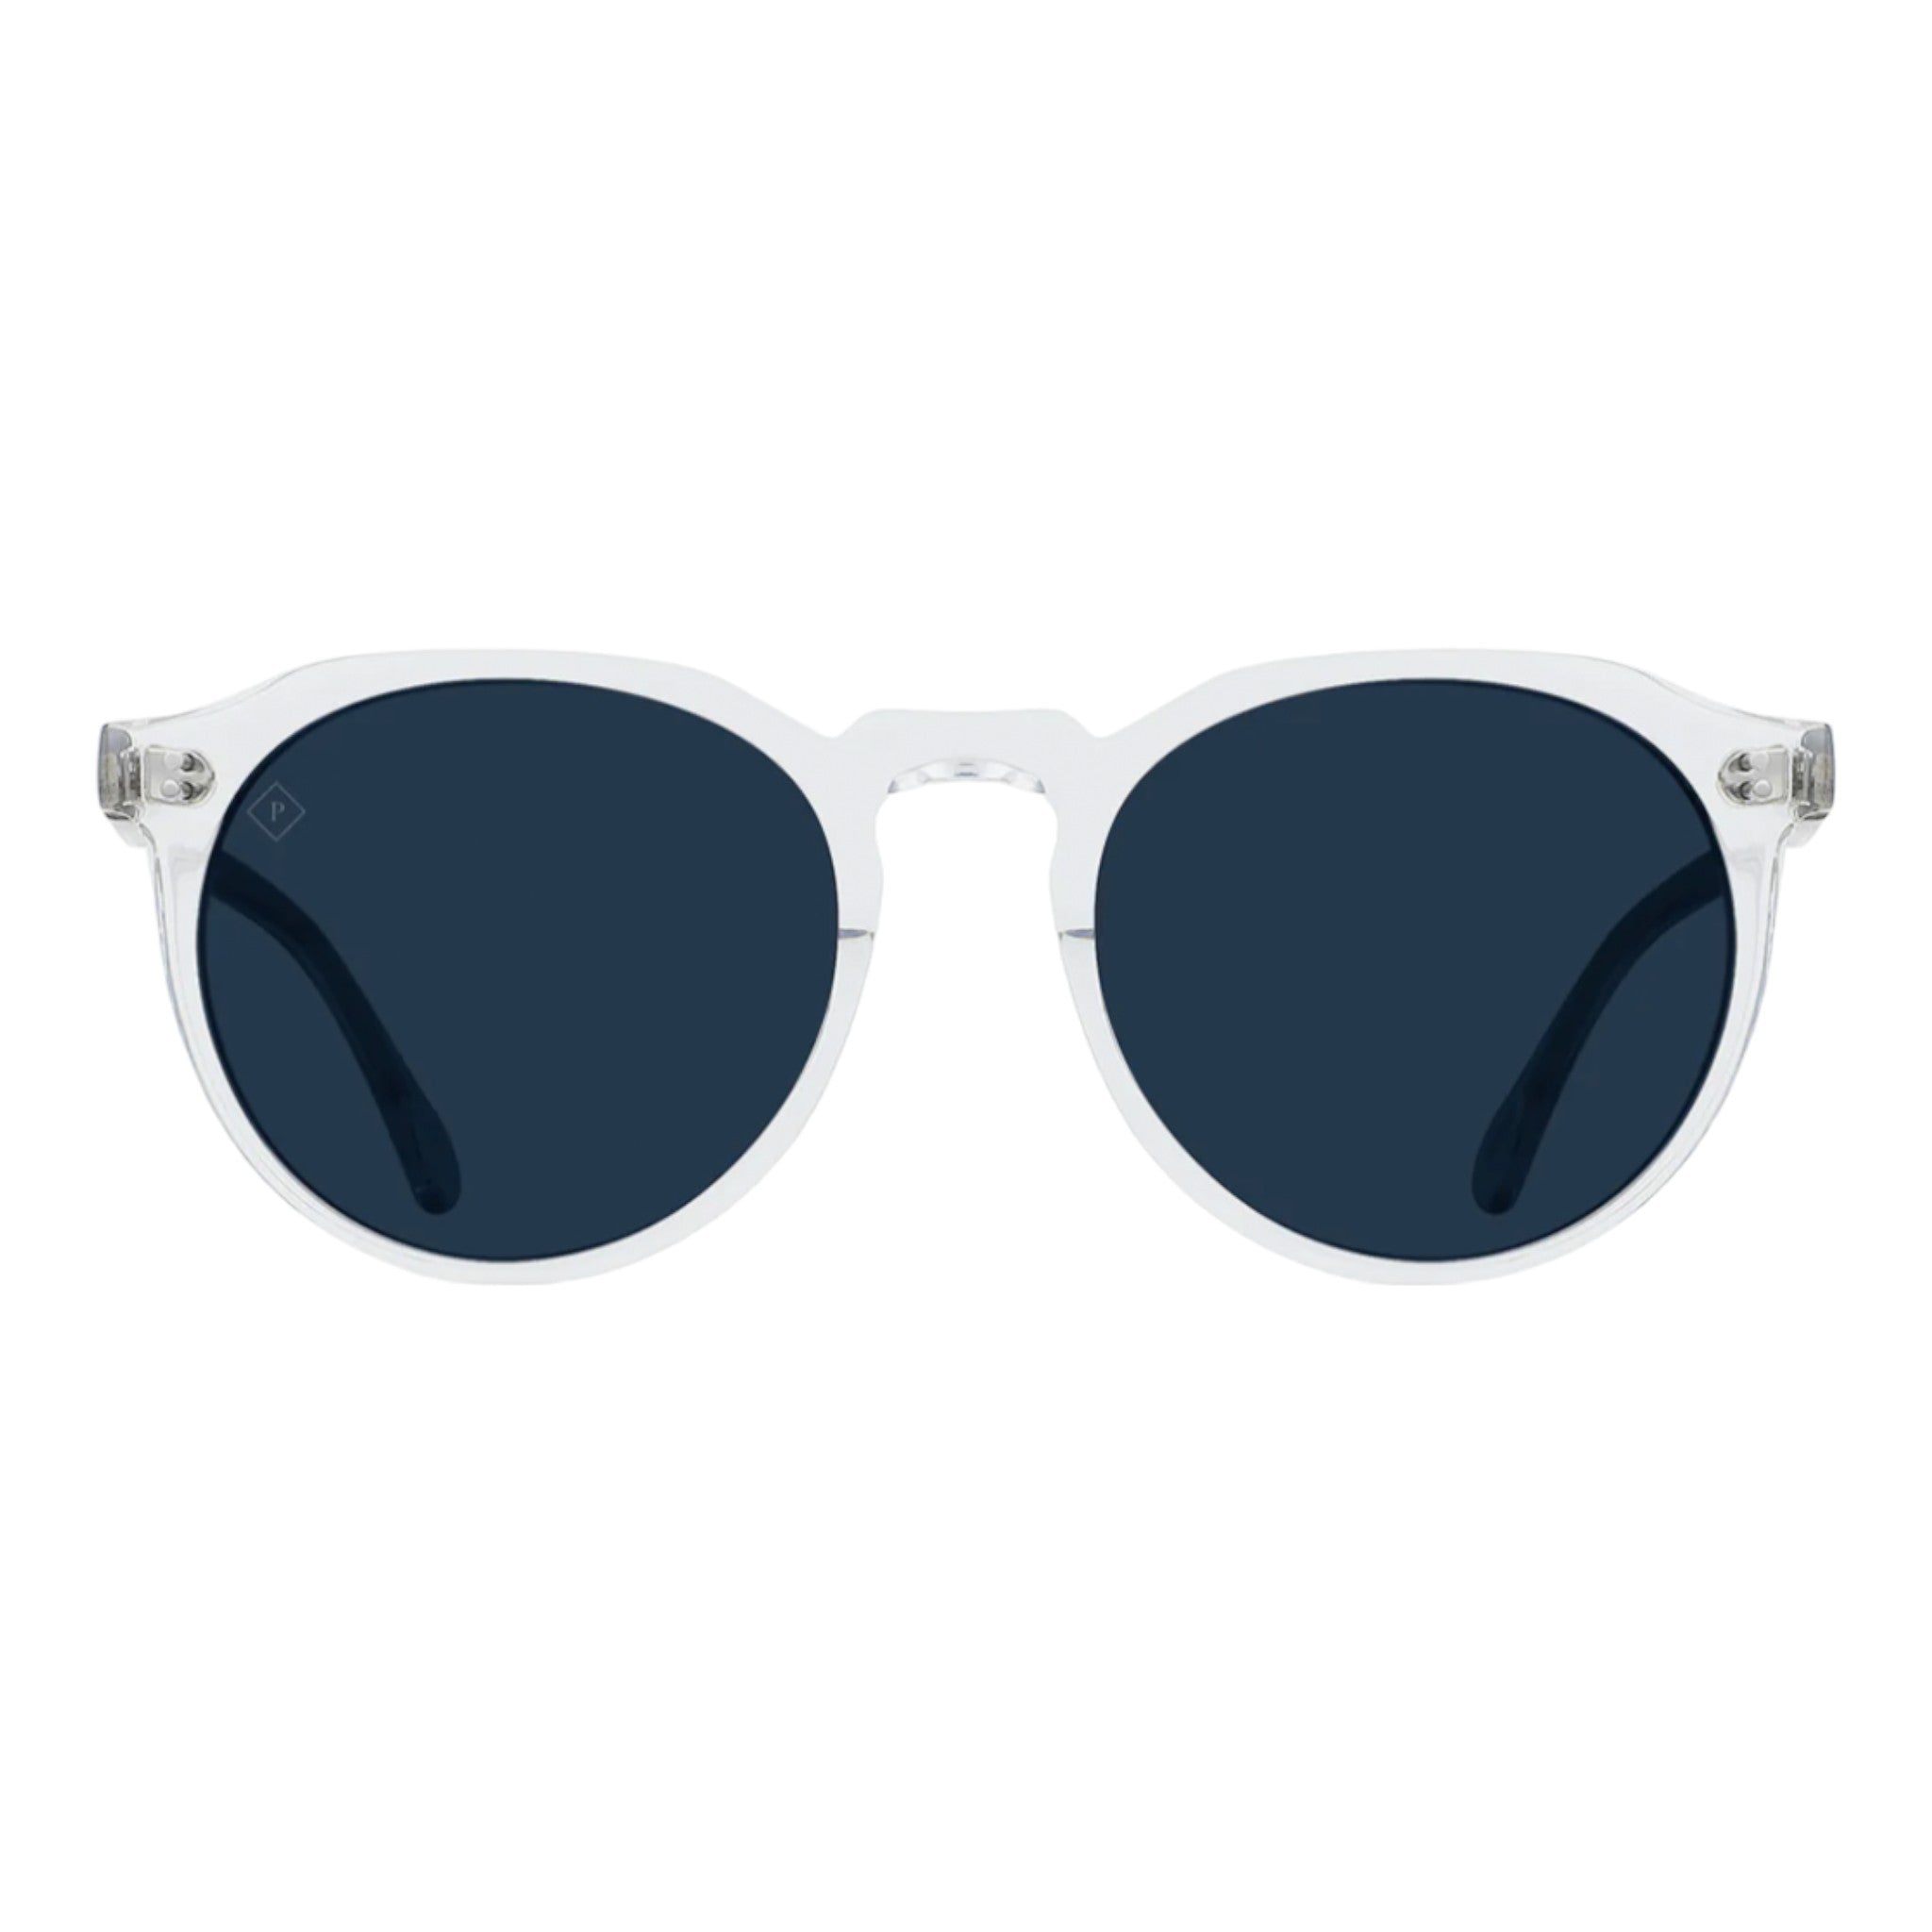 Raen - Remmy 49 Sunglasses - Crystal Clear / Polarized Blue Smoke